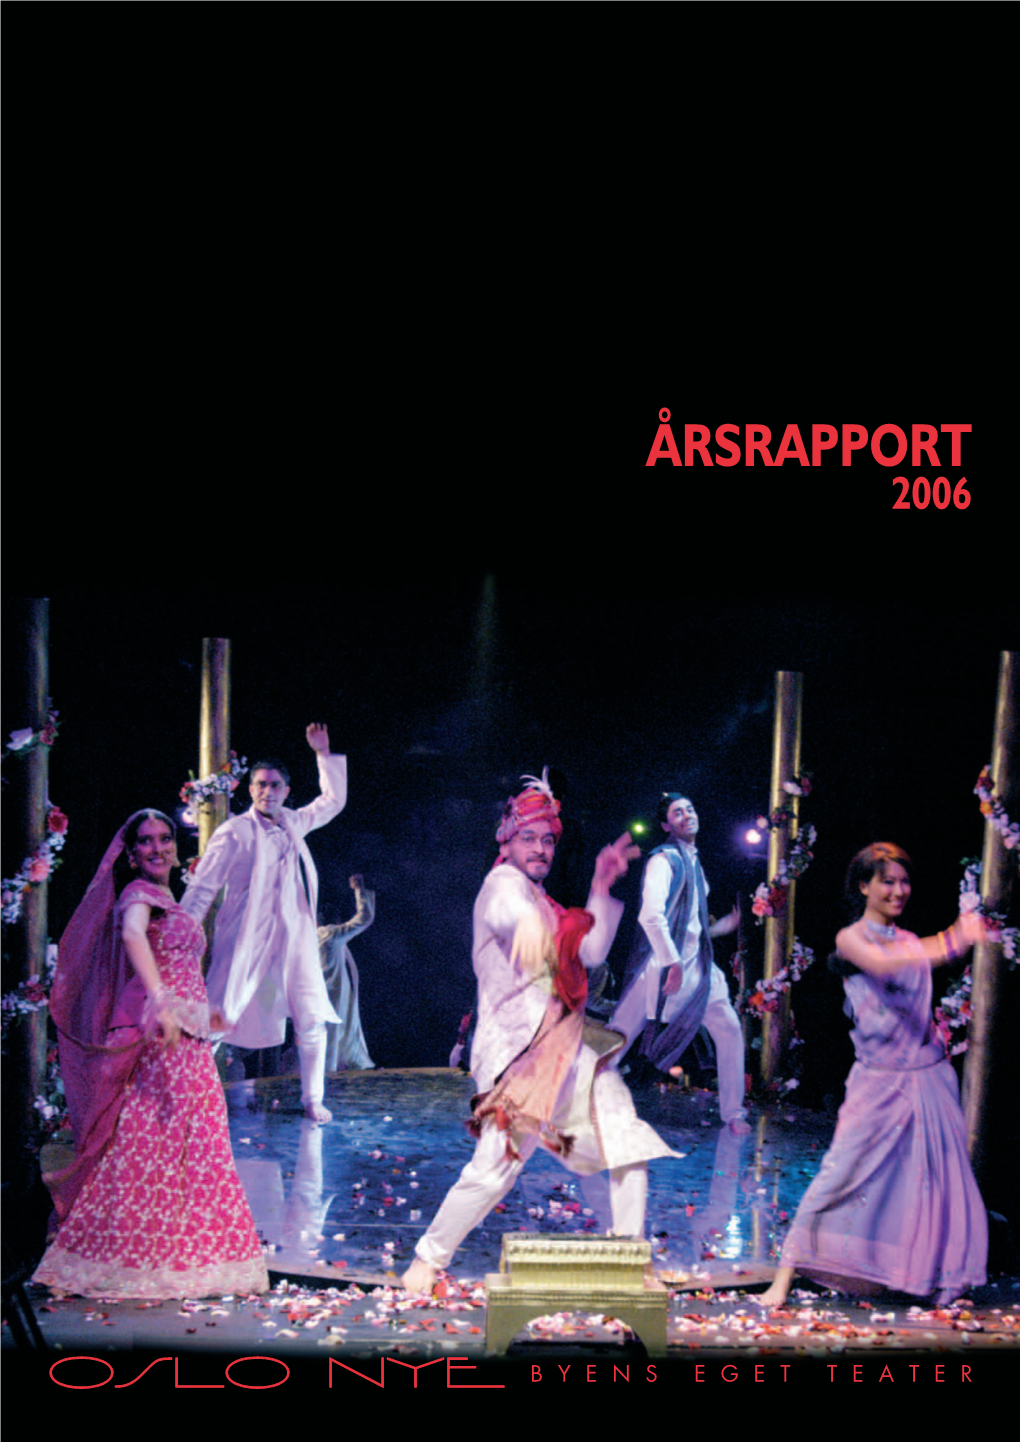 Årsrapport 2006 Oslo Nye Teater